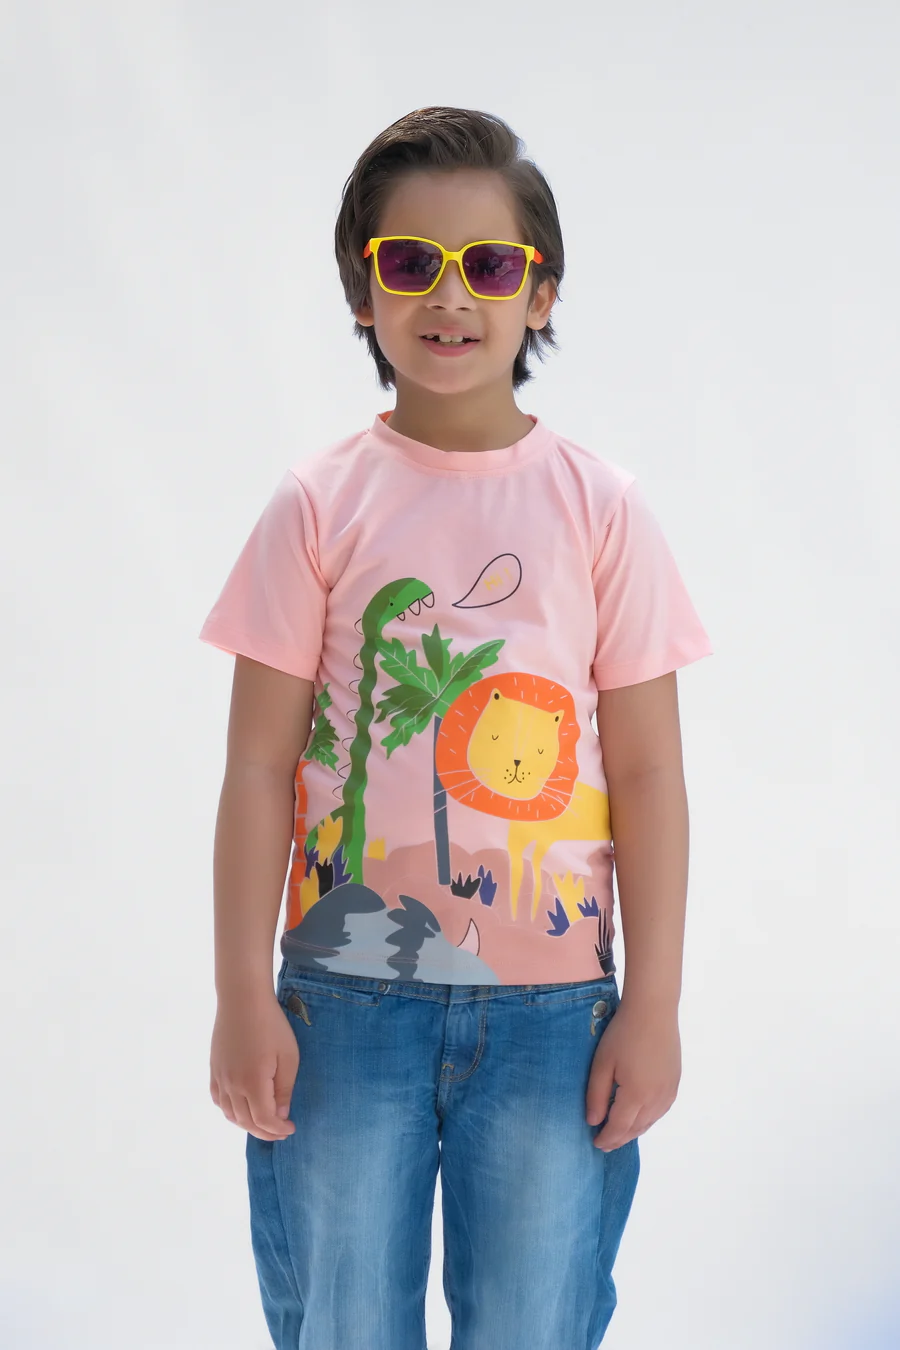 Animal Kingdom - Half Sleeves T-Shirts For Kids - Light Pink